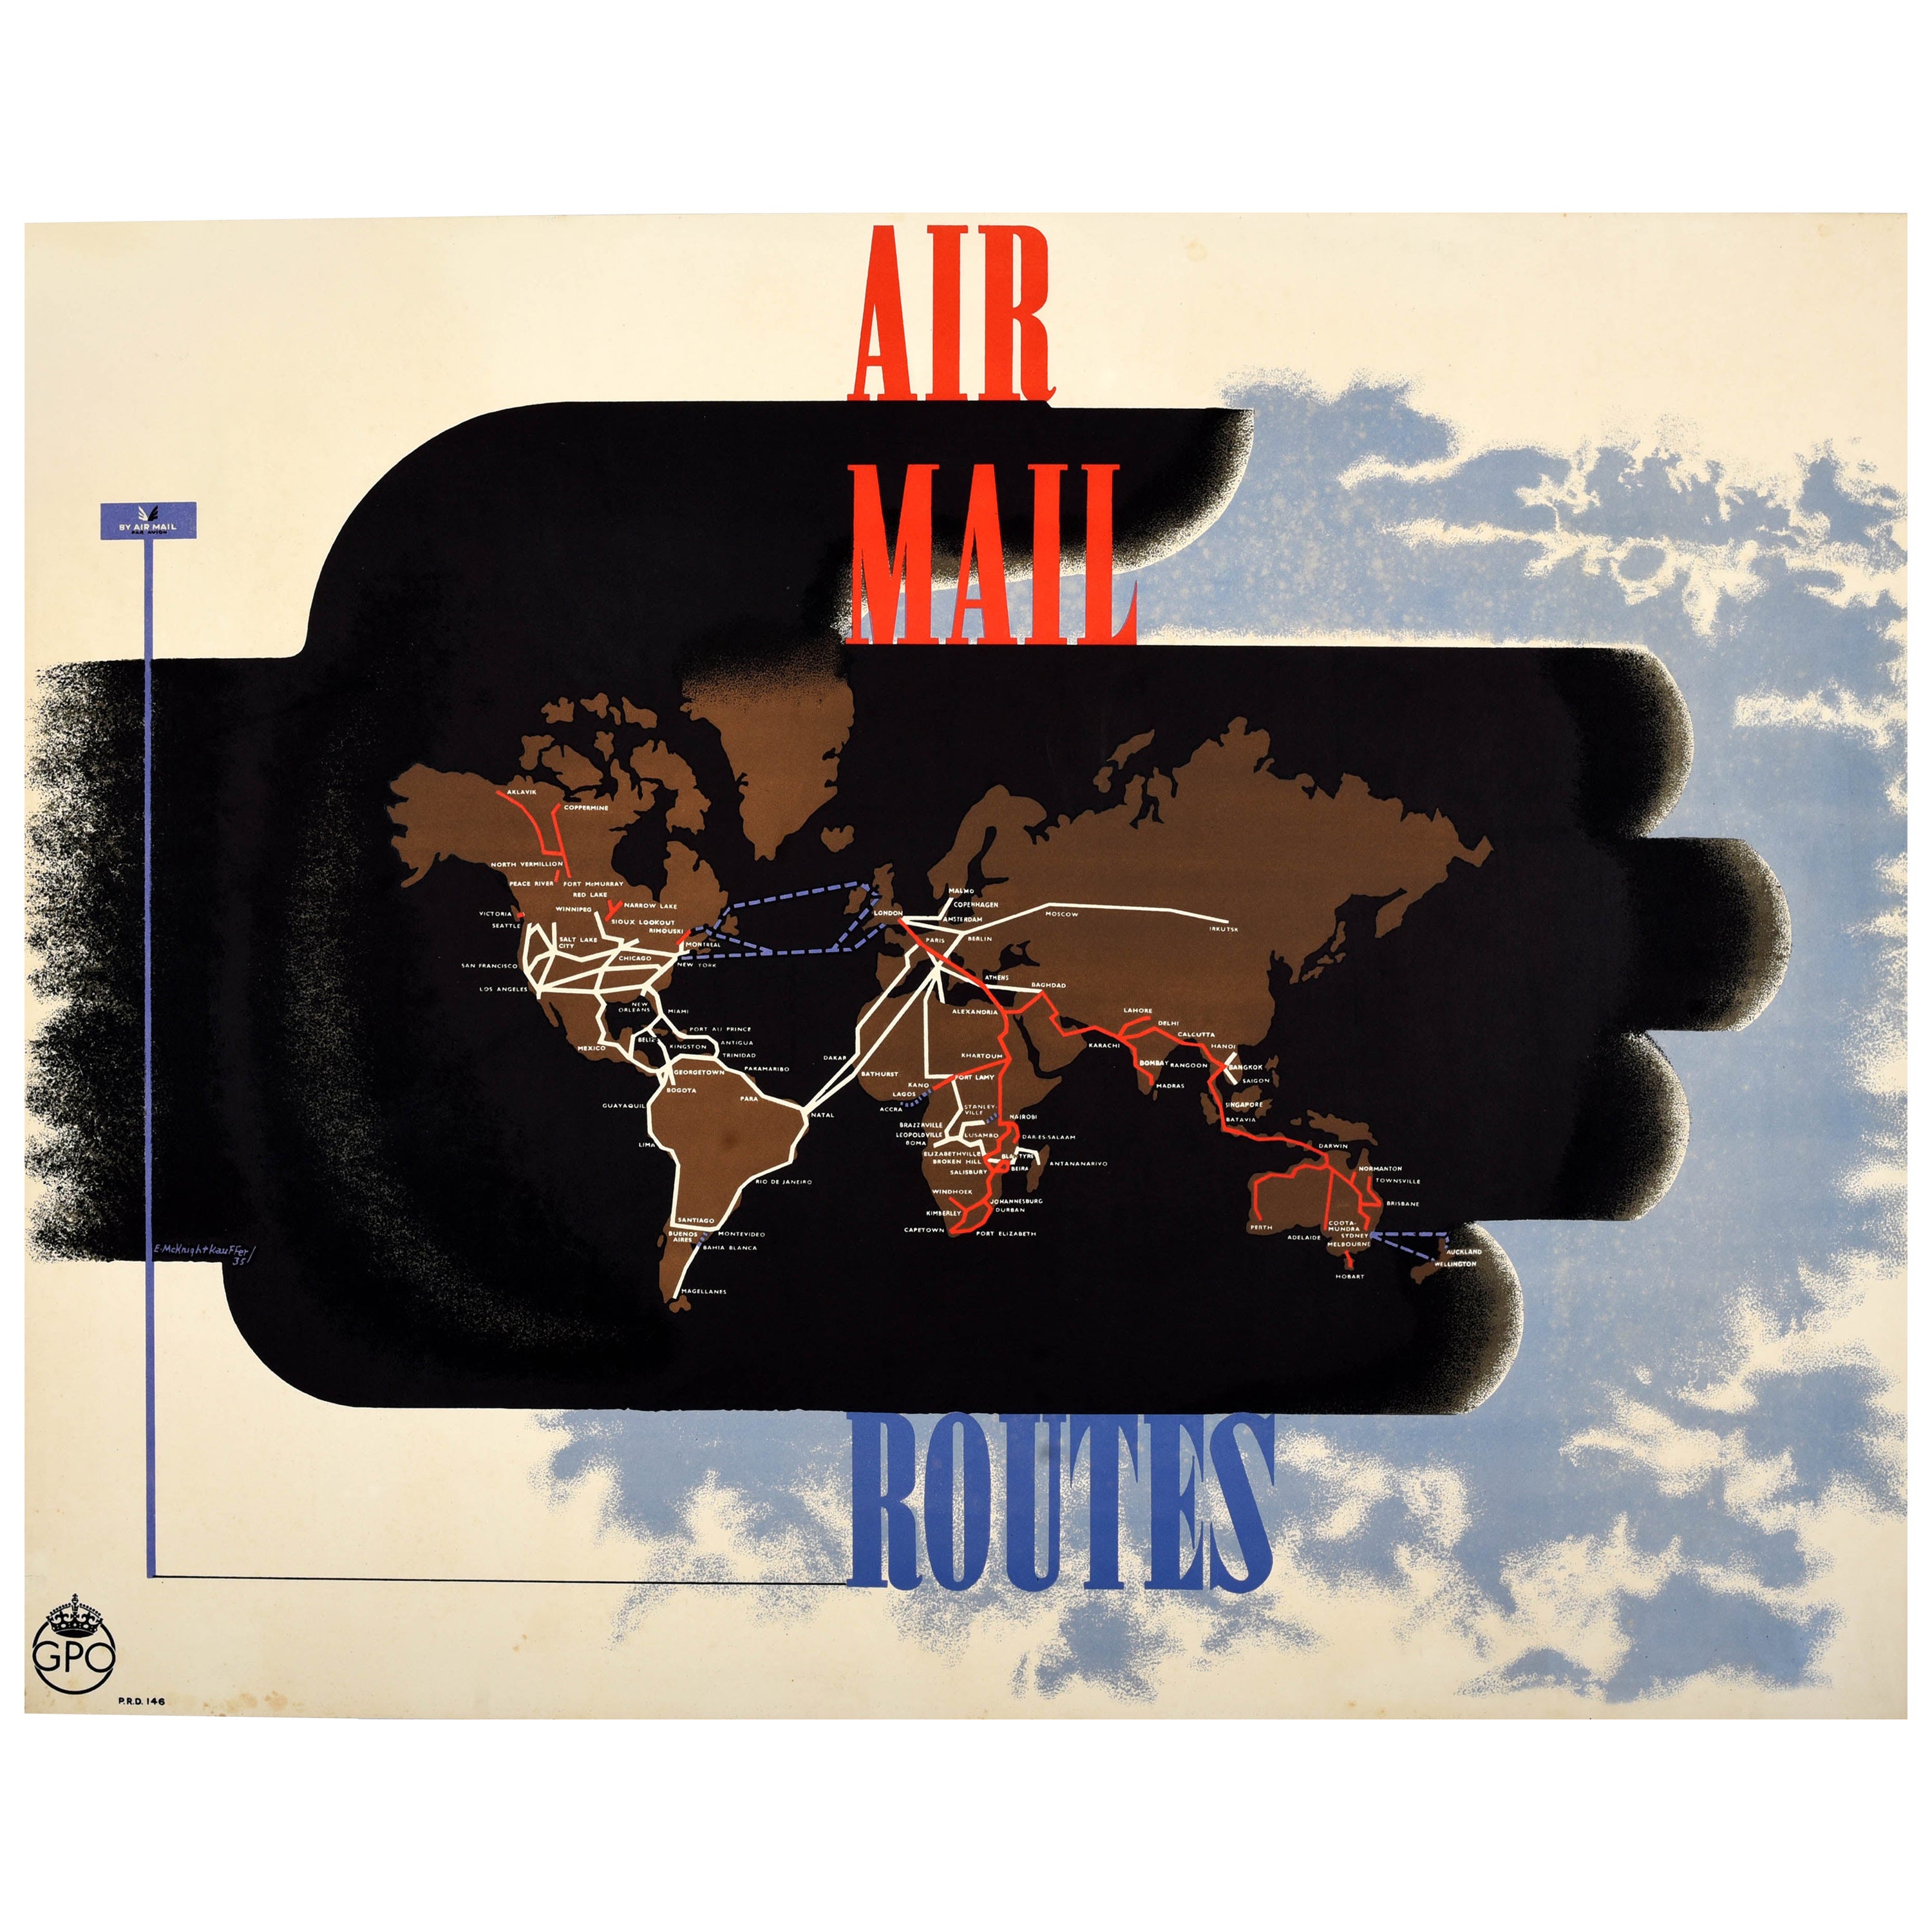 Rare affiche publicitaire vintage d'origine Air Mail Routes GPO Mcknight Kauffer